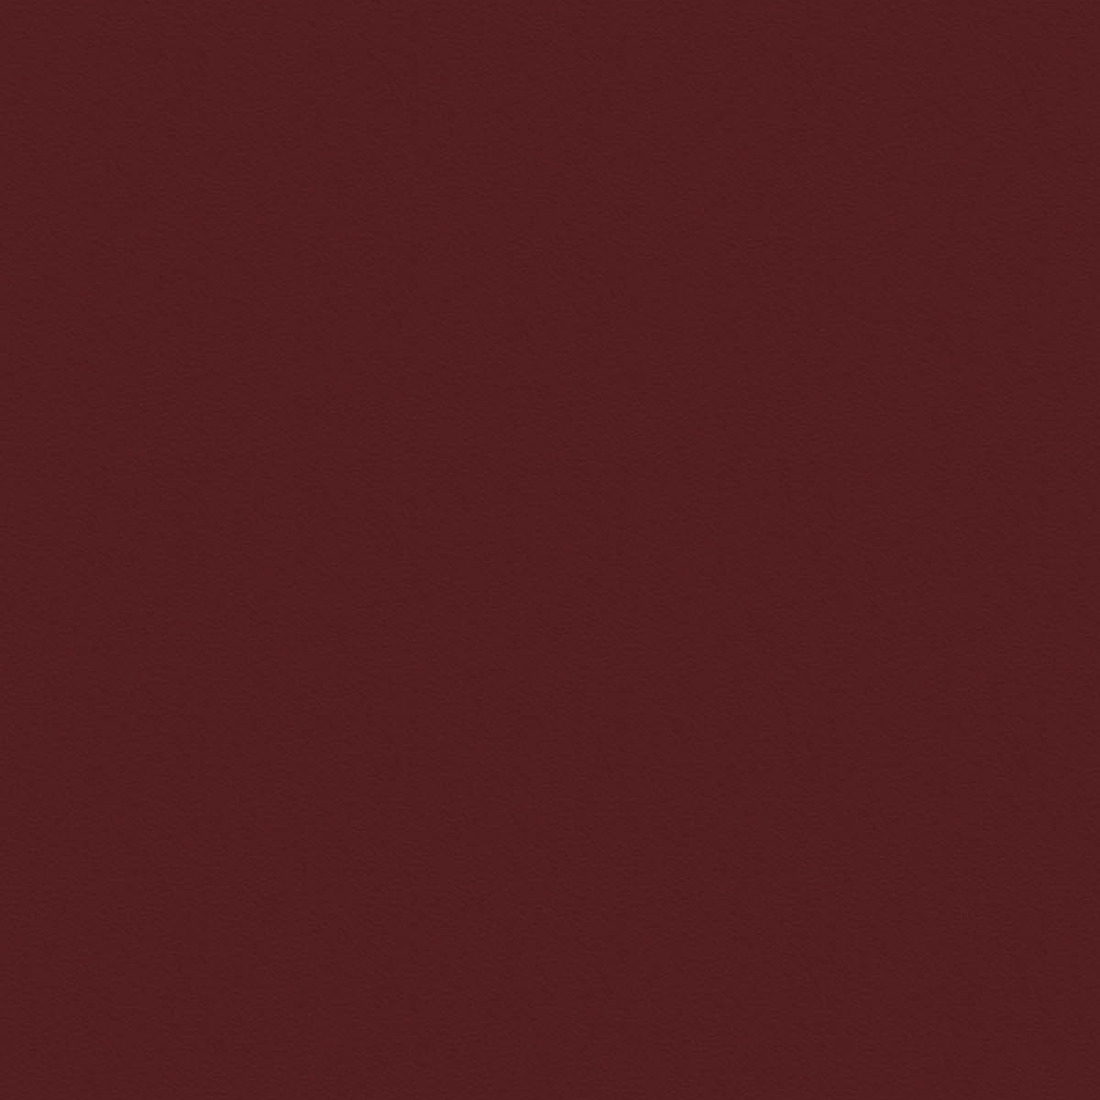 Red Bordeaux HD wallpapers, Desktop wallpaper - most viewed